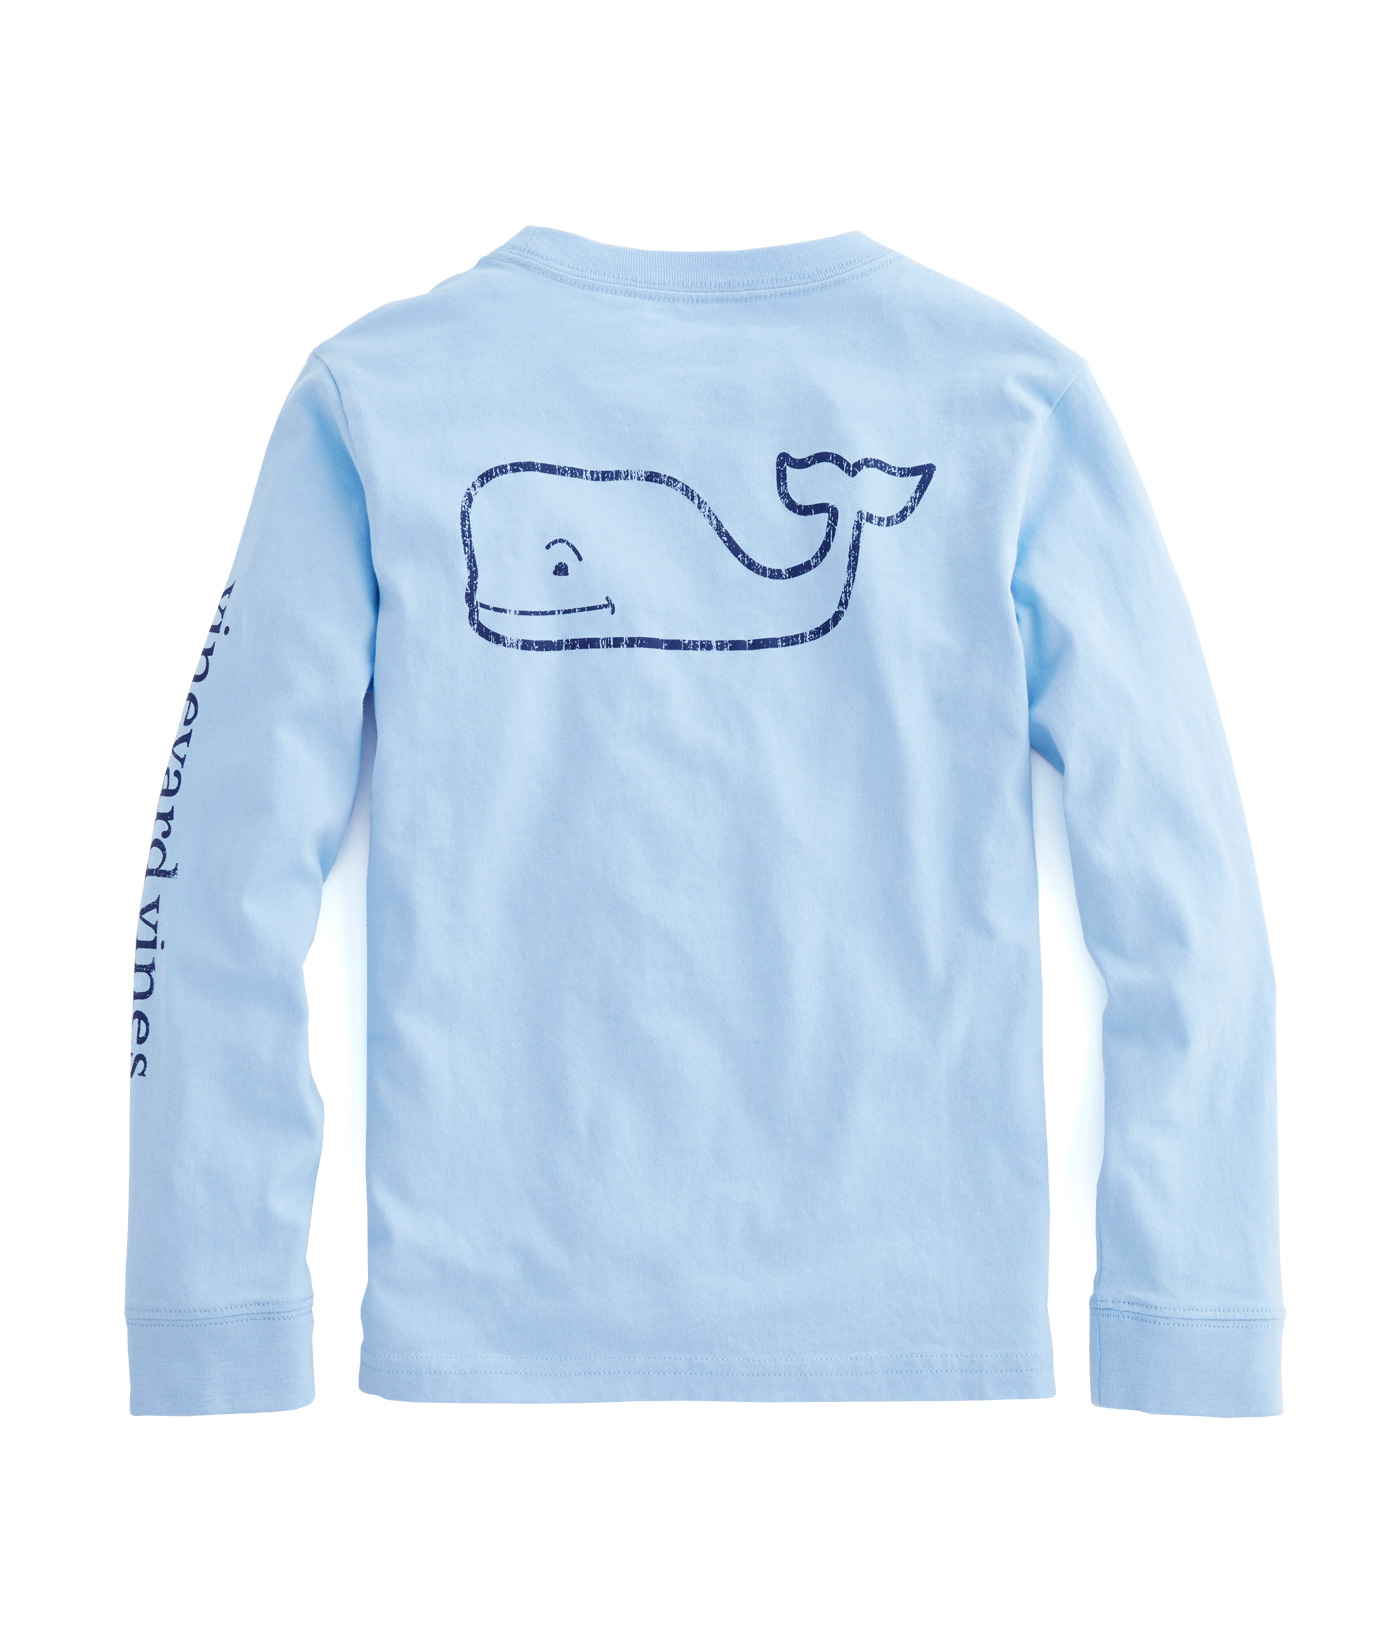 Vineyard Vines Boys Gray Heather Glow Vintage Whale Long Sleeve Pocket T-Shirt 